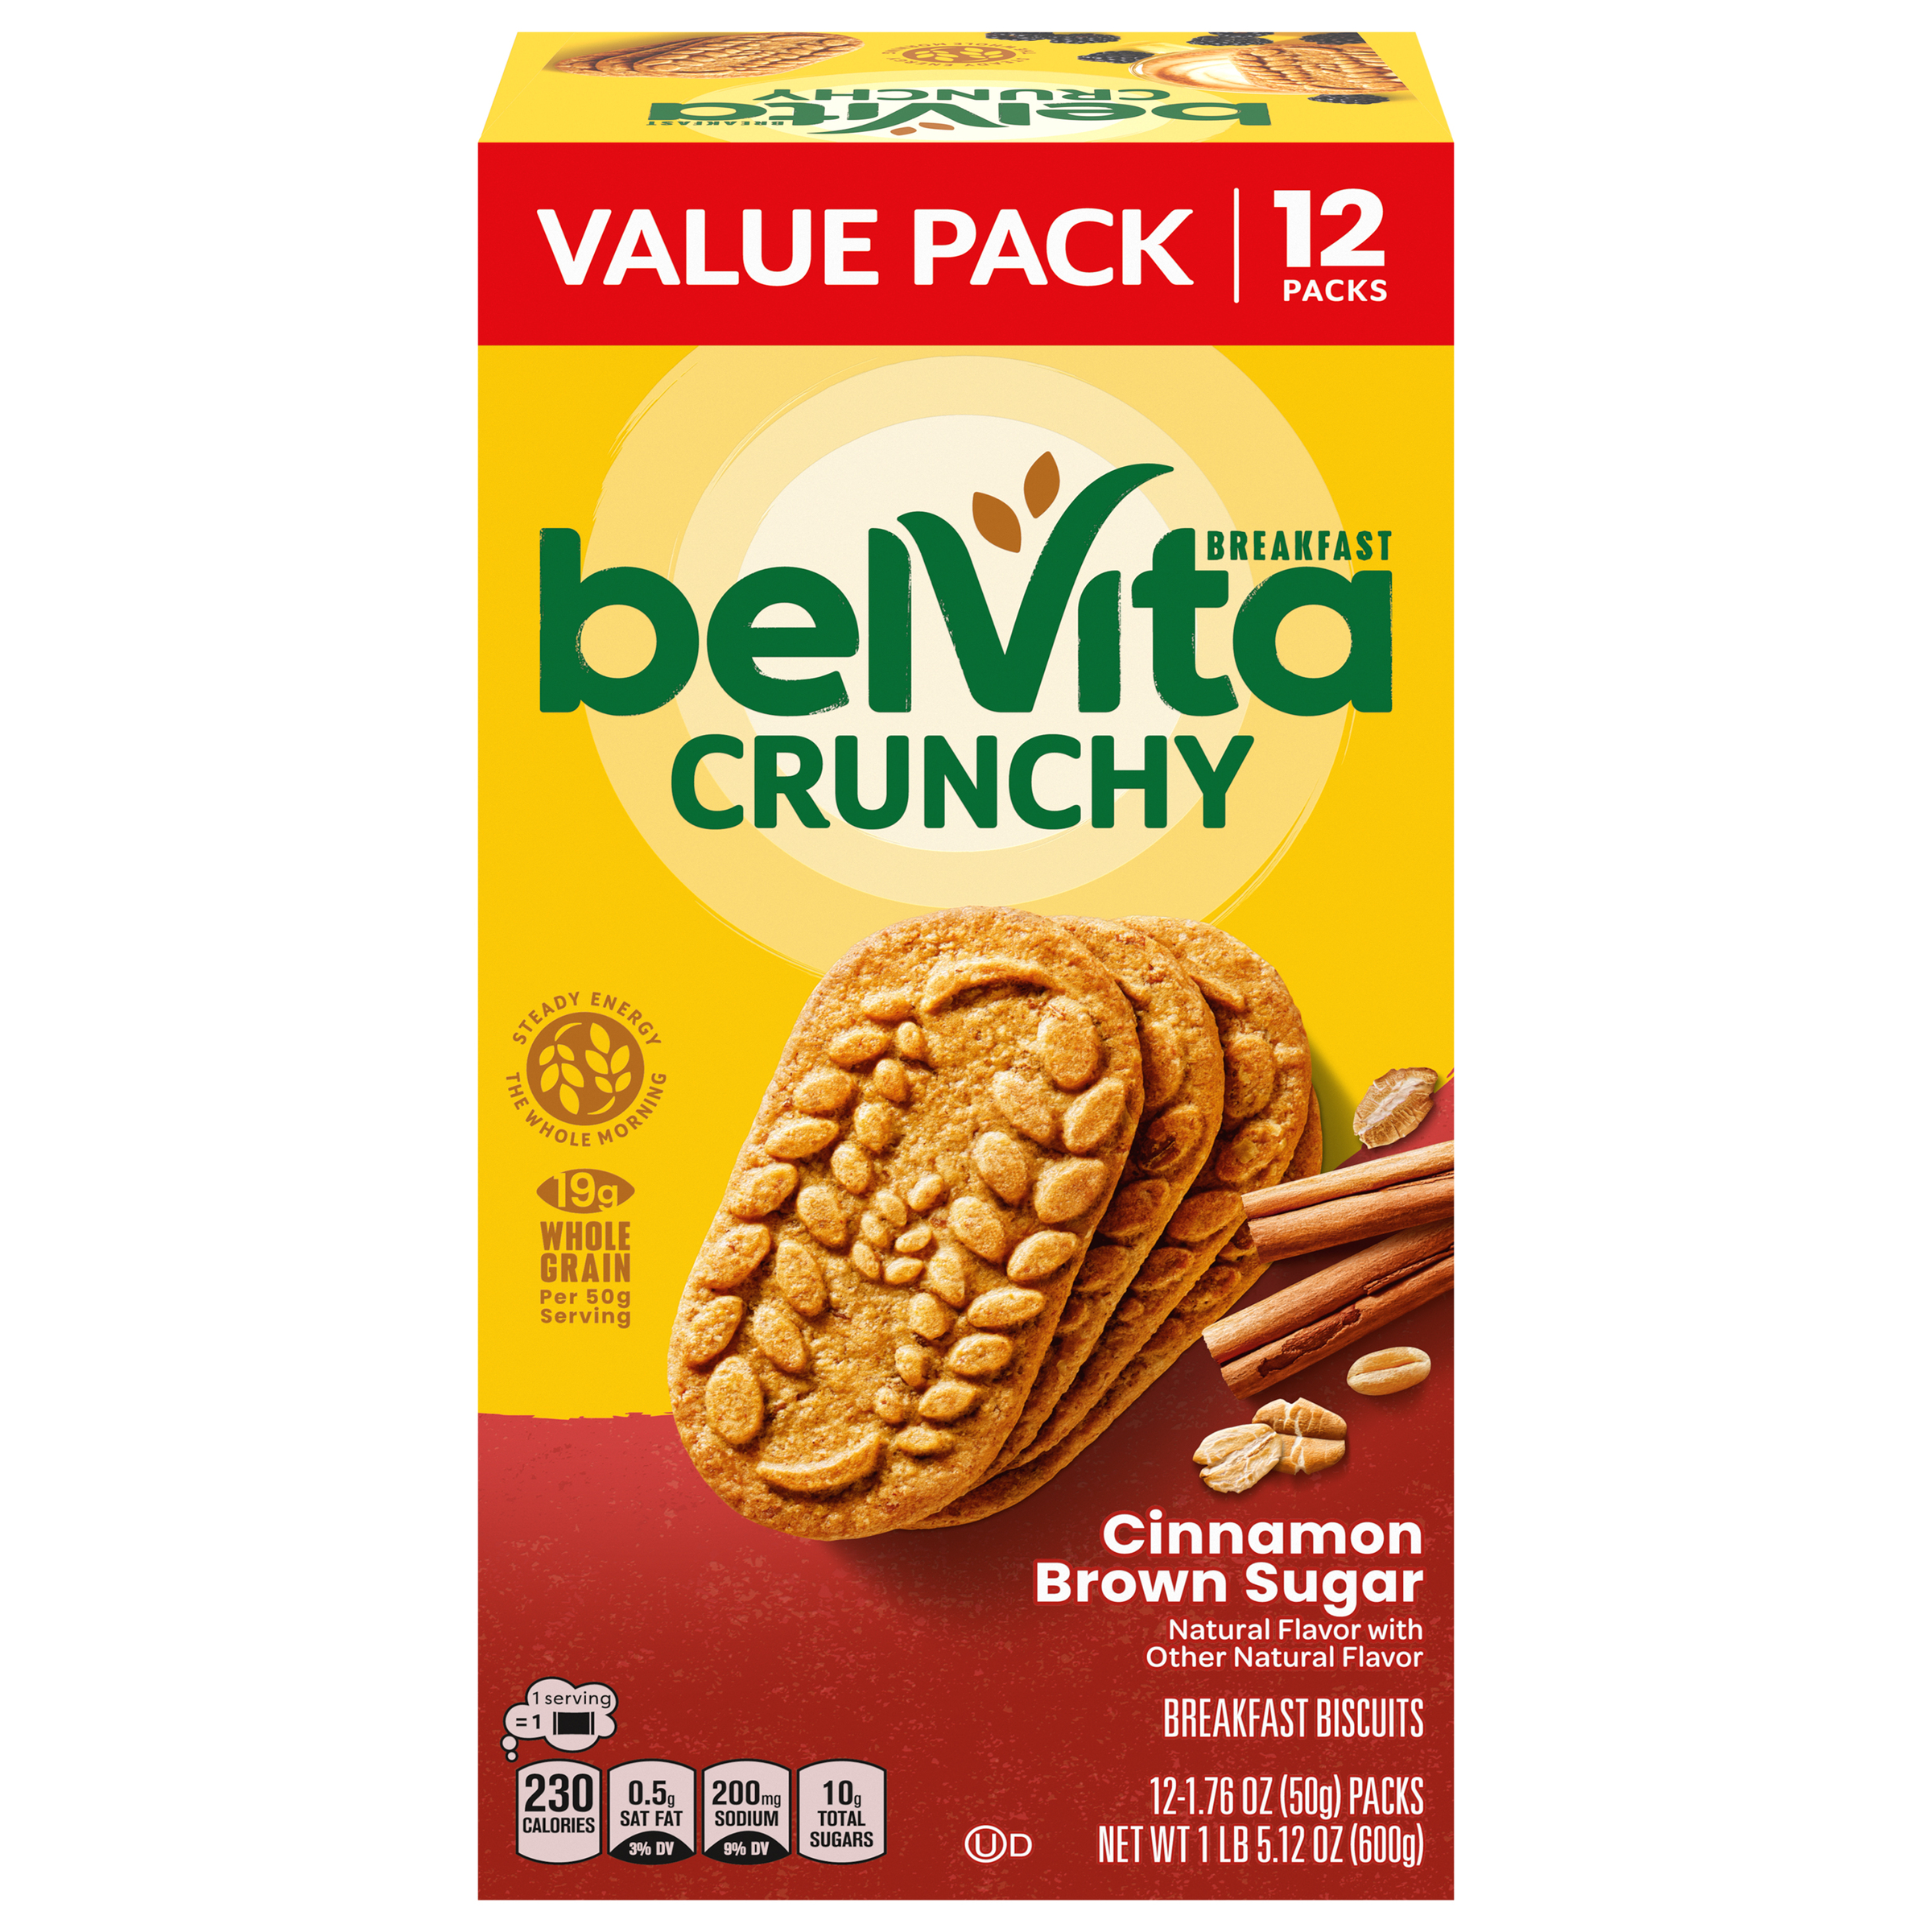 BELVITA Crunchy Cinnamon Brown Sugar Breakfast Biscuits 21.12 OZ